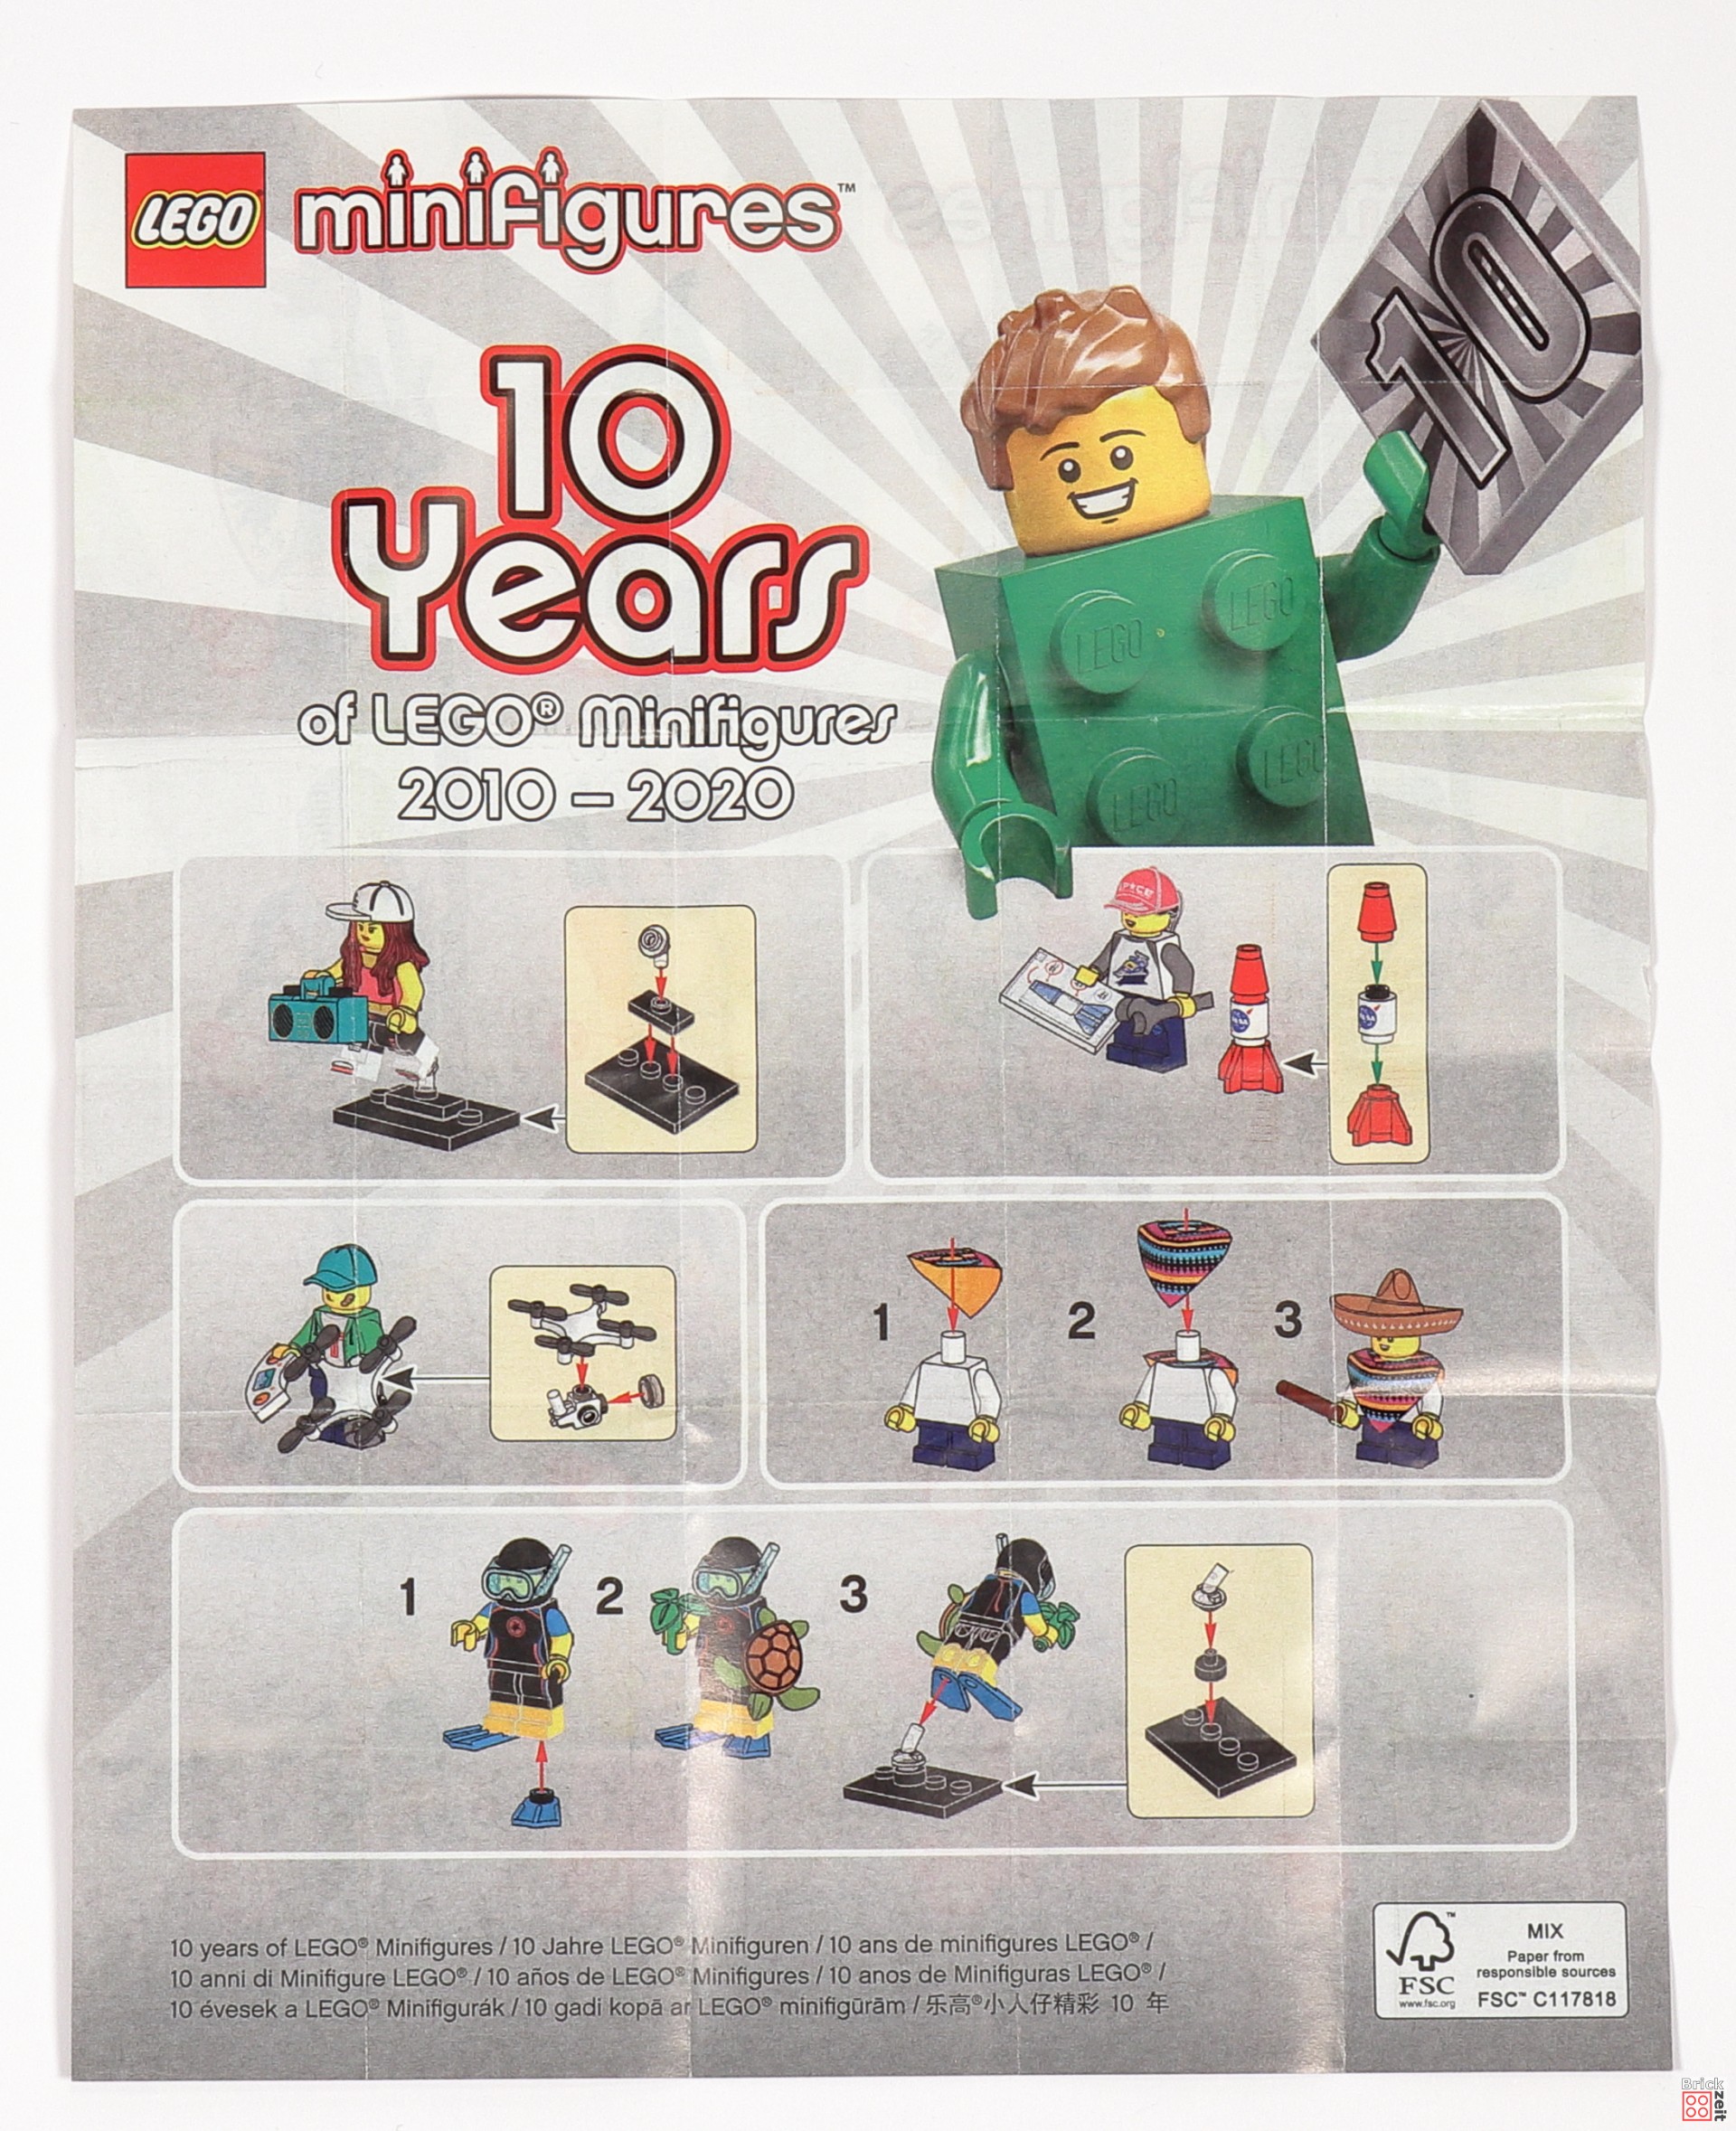 Erbse Leichtathletin Lego 71027 Minifiguren Serie 20 Wikinger Pinata Junge 